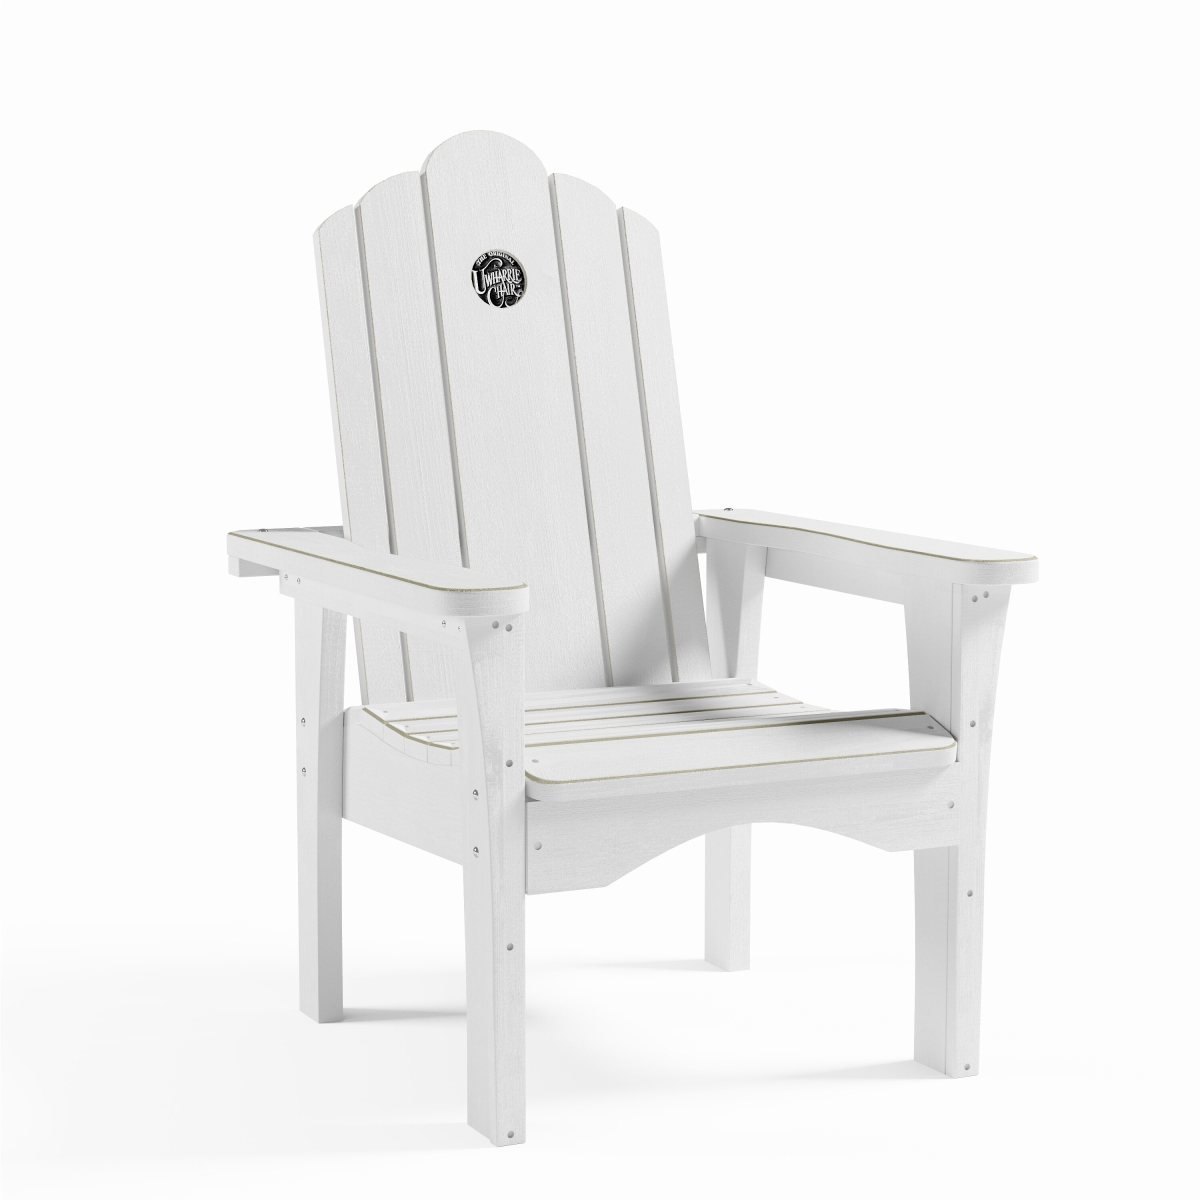 S114-046 Original Wood Lounge Chair, Flamingo Pine - 30.5 X 33.5 X 43.5 In.